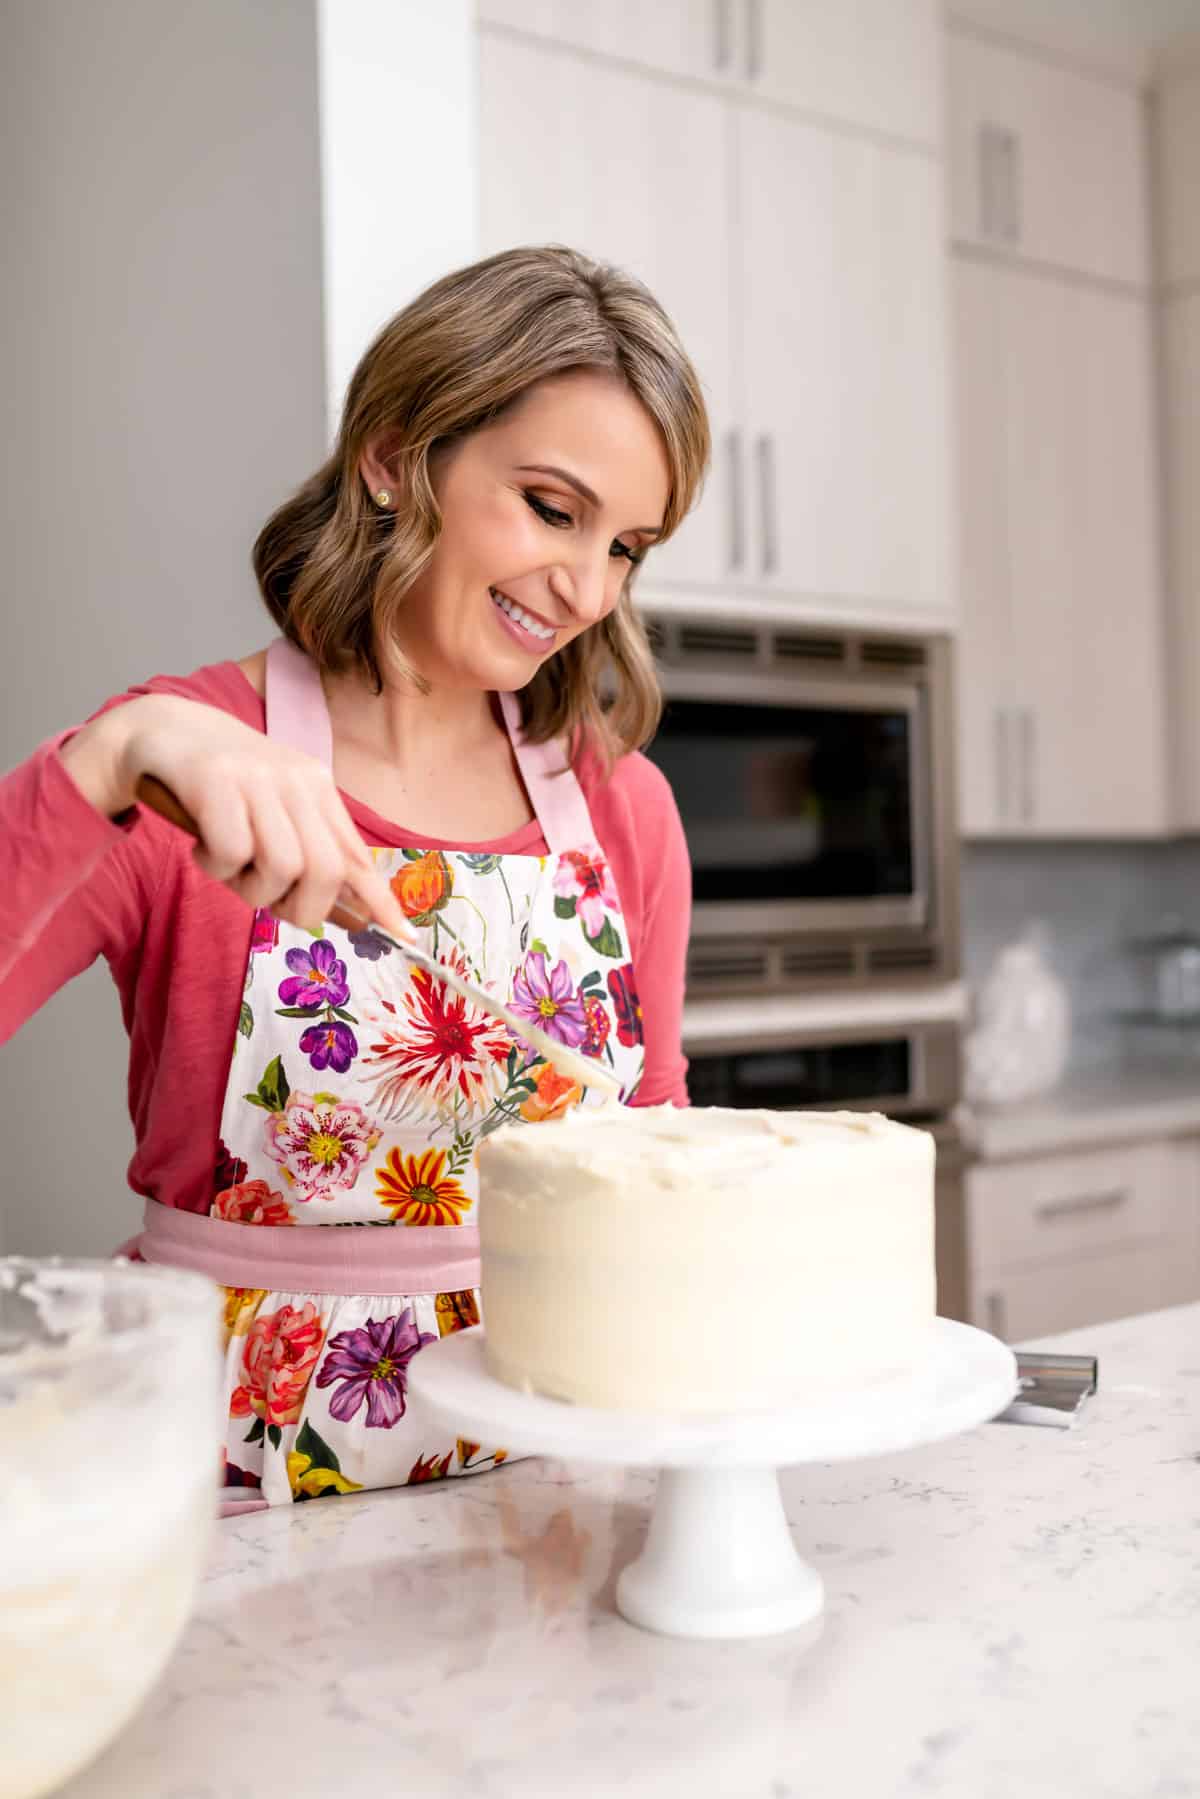 Cakes Fun 2 Bake Oven Includes Baking Pan & Cooking Utensils Bakes Cookies Brownies & More in Minutes 